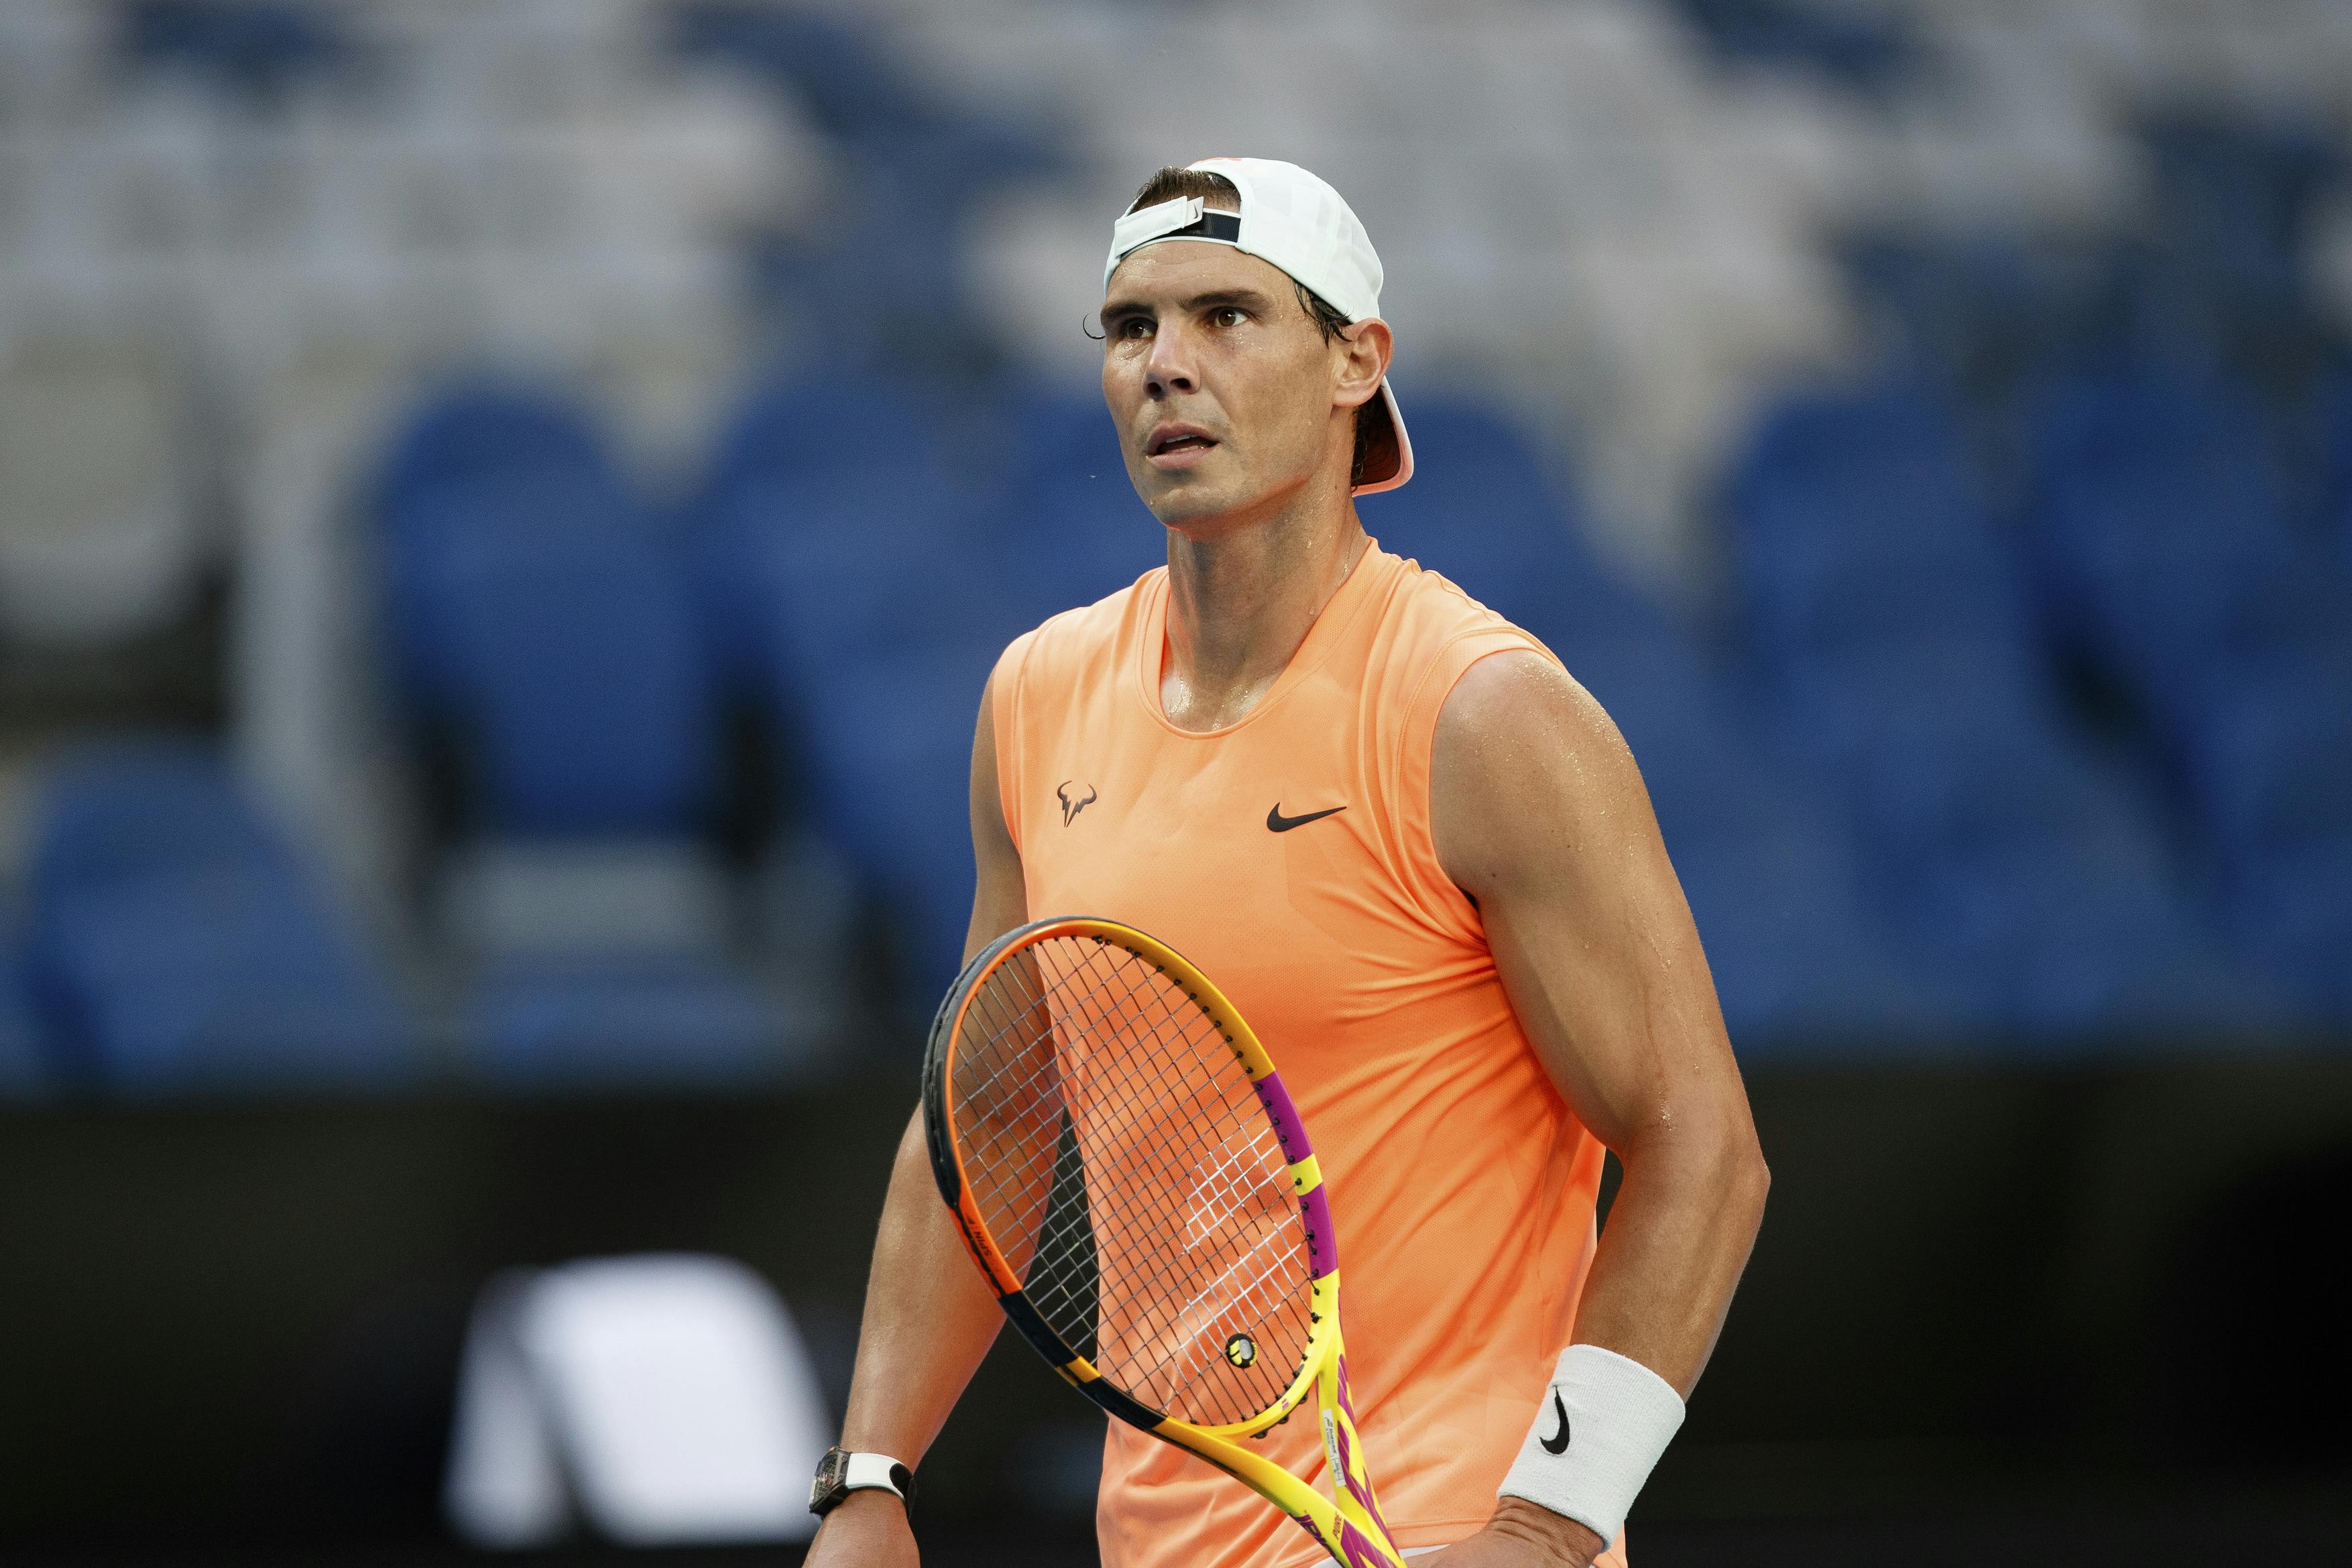 Nadal remaining upbeat despite Australian Open disruption - Roland-Garros - The 2021 Roland-Garros Tournament official